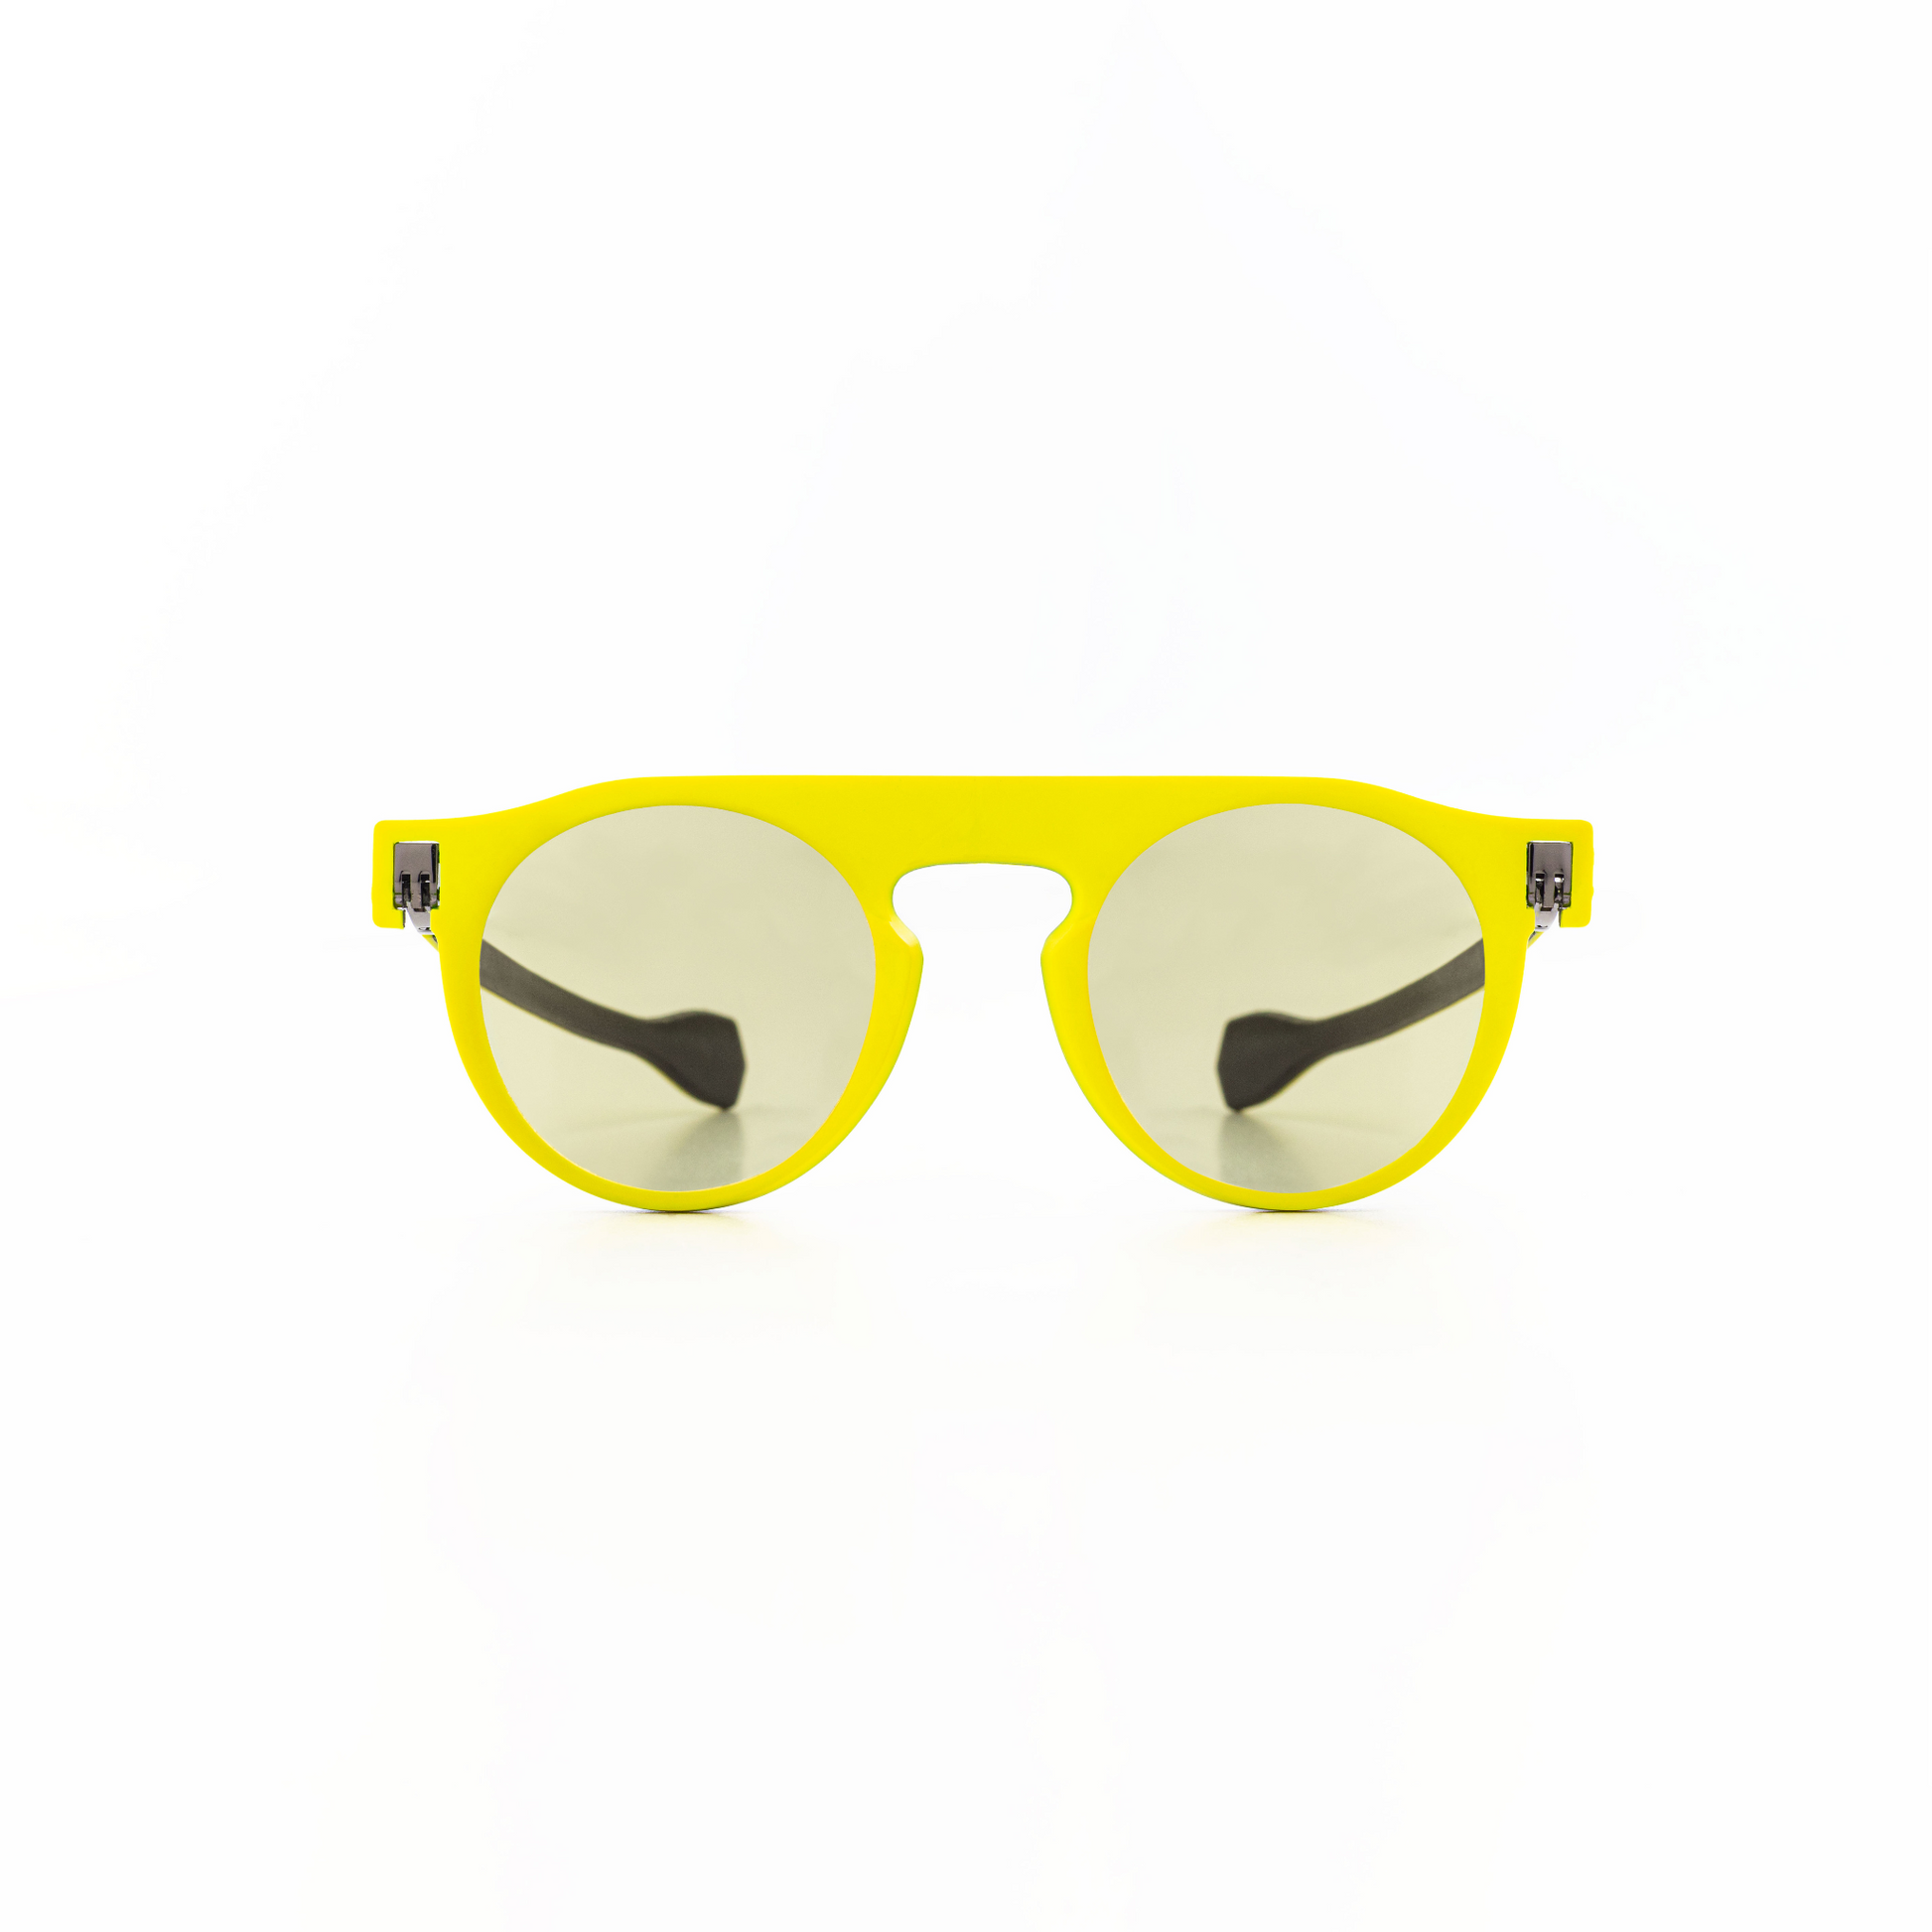 Reverso sunglasses black & yellow reversible & ultra light front view 1